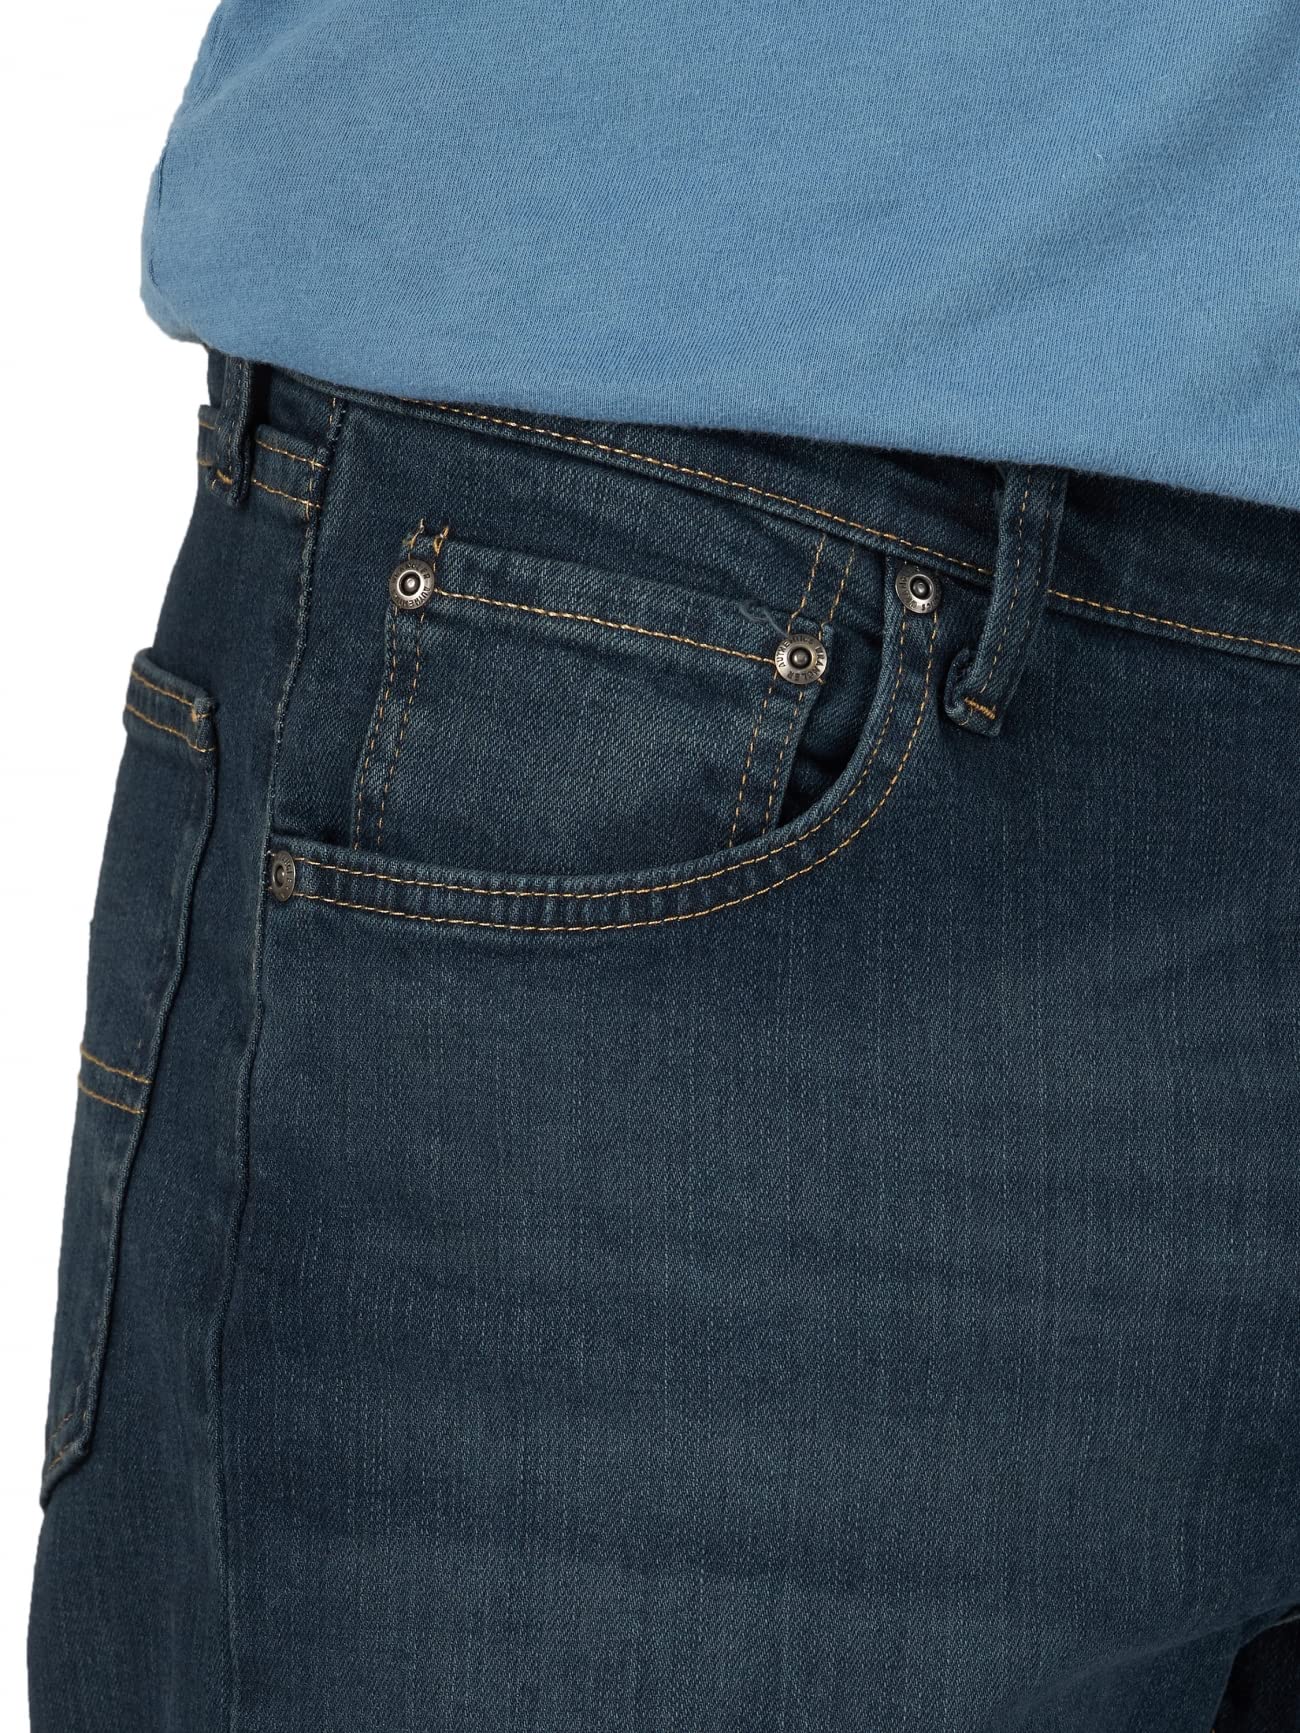 Wrangler Authentics Men's Classic 5-Pocket Relaxed Fit Jean, Military Blue Flex, 32W x 32L